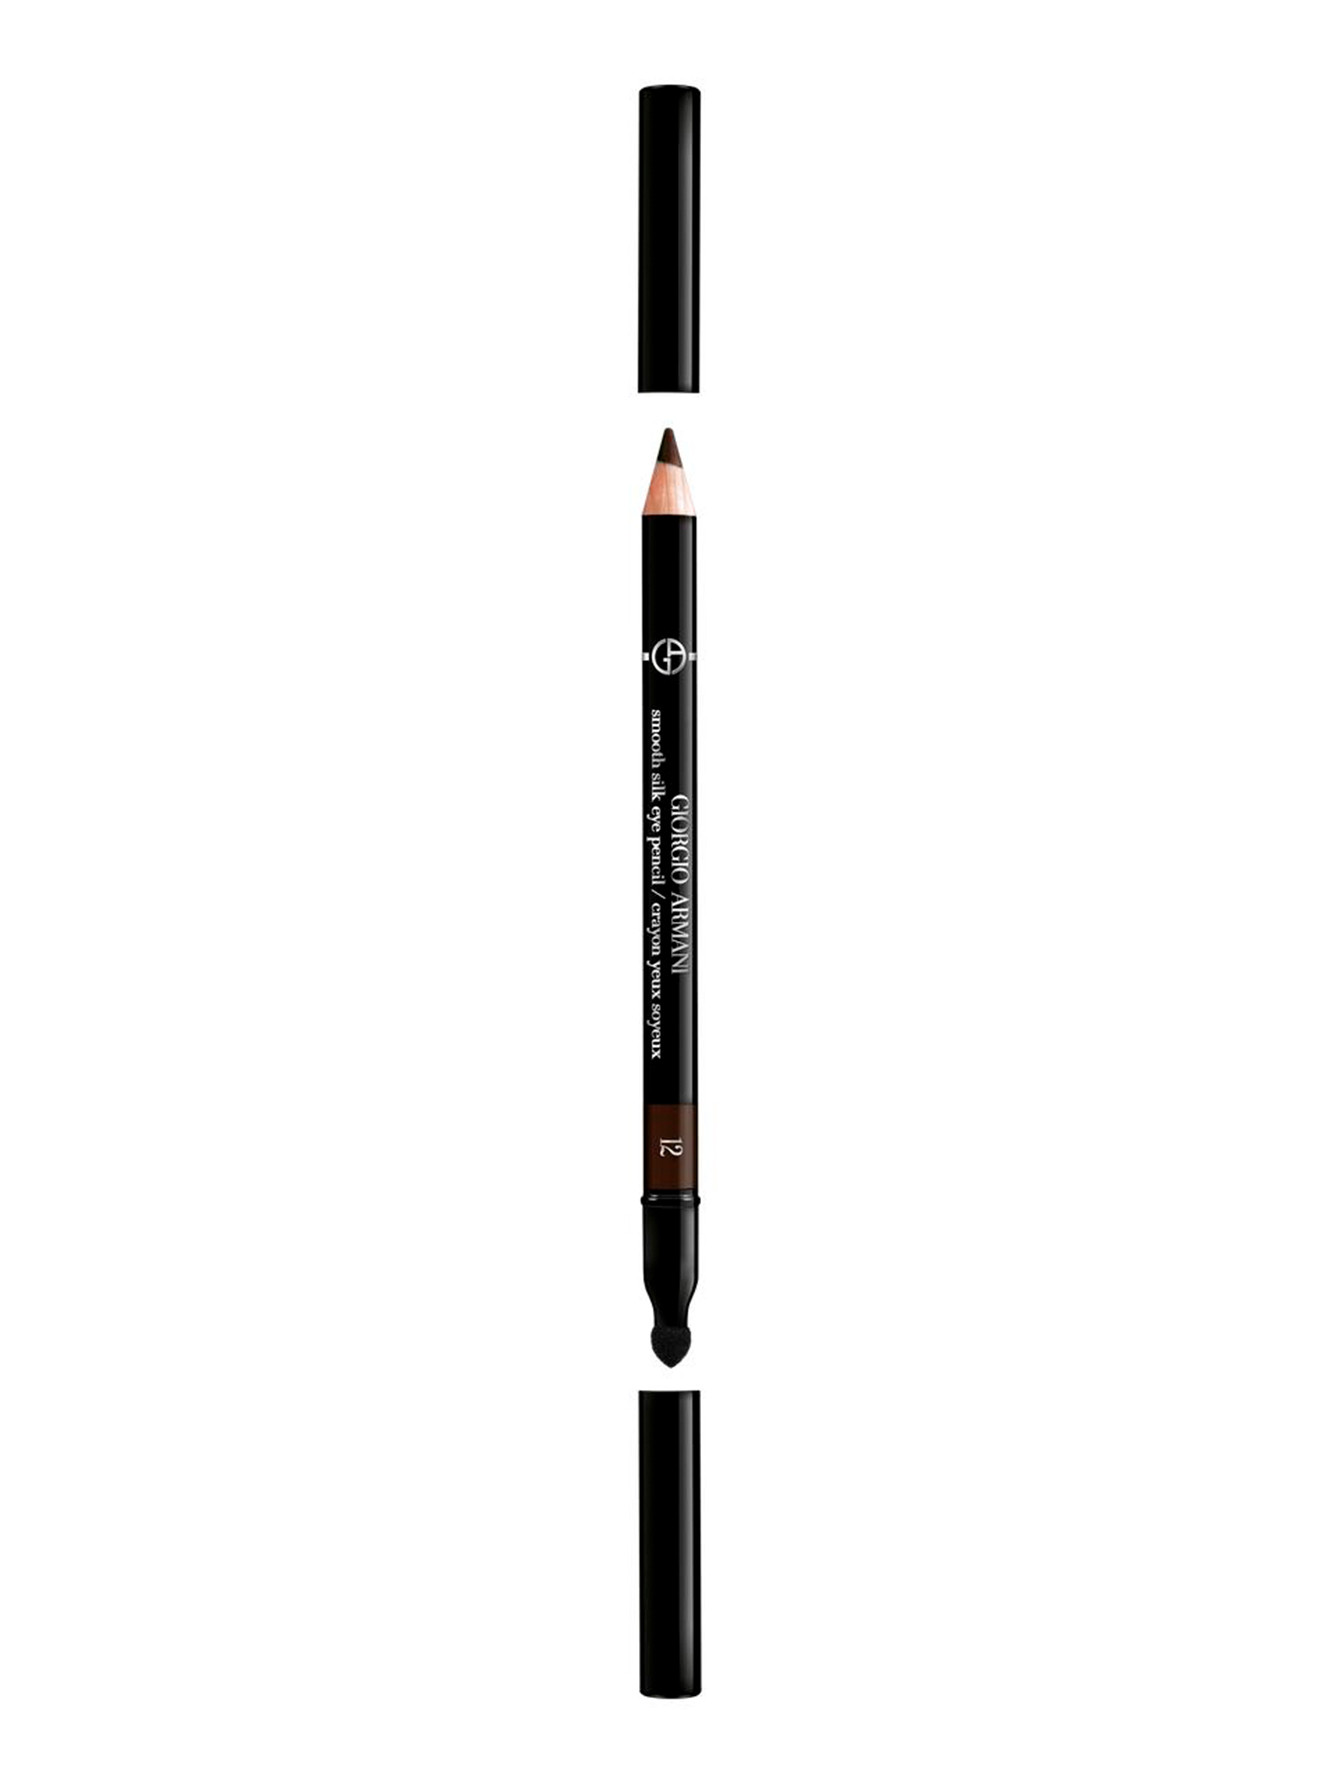 Карандаш для глаз - №12, Smooth Silk Eye Pencil - Общий вид